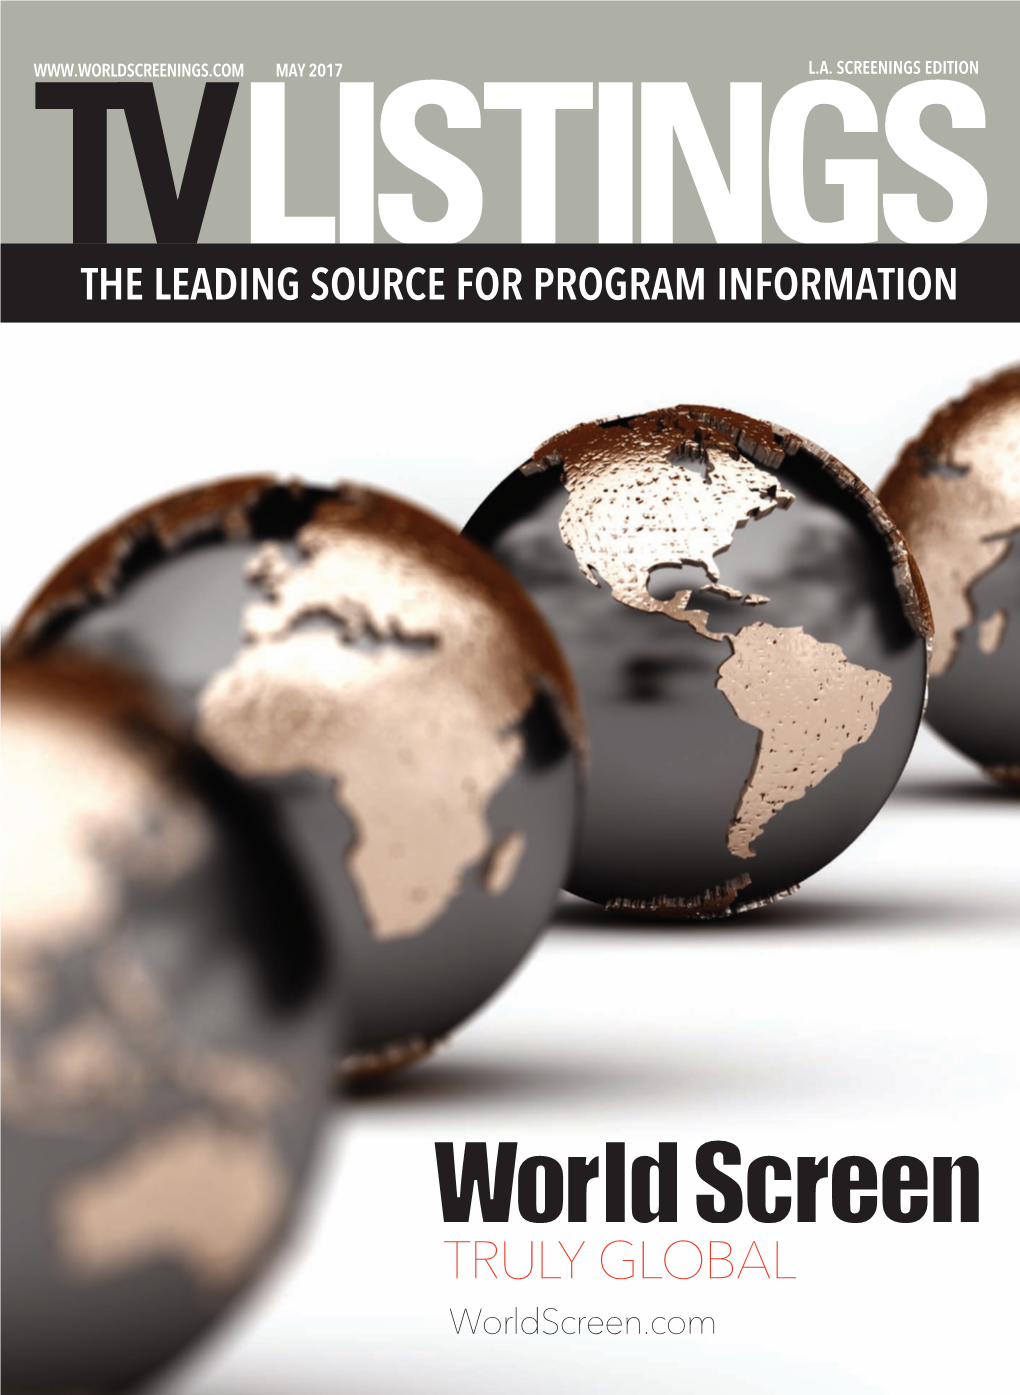 TRULY GLOBAL Worldscreen.Com *LIST 517__ALT 2 LIS 1006 LISTINGS 5/5/17 4:06 PM Page 2